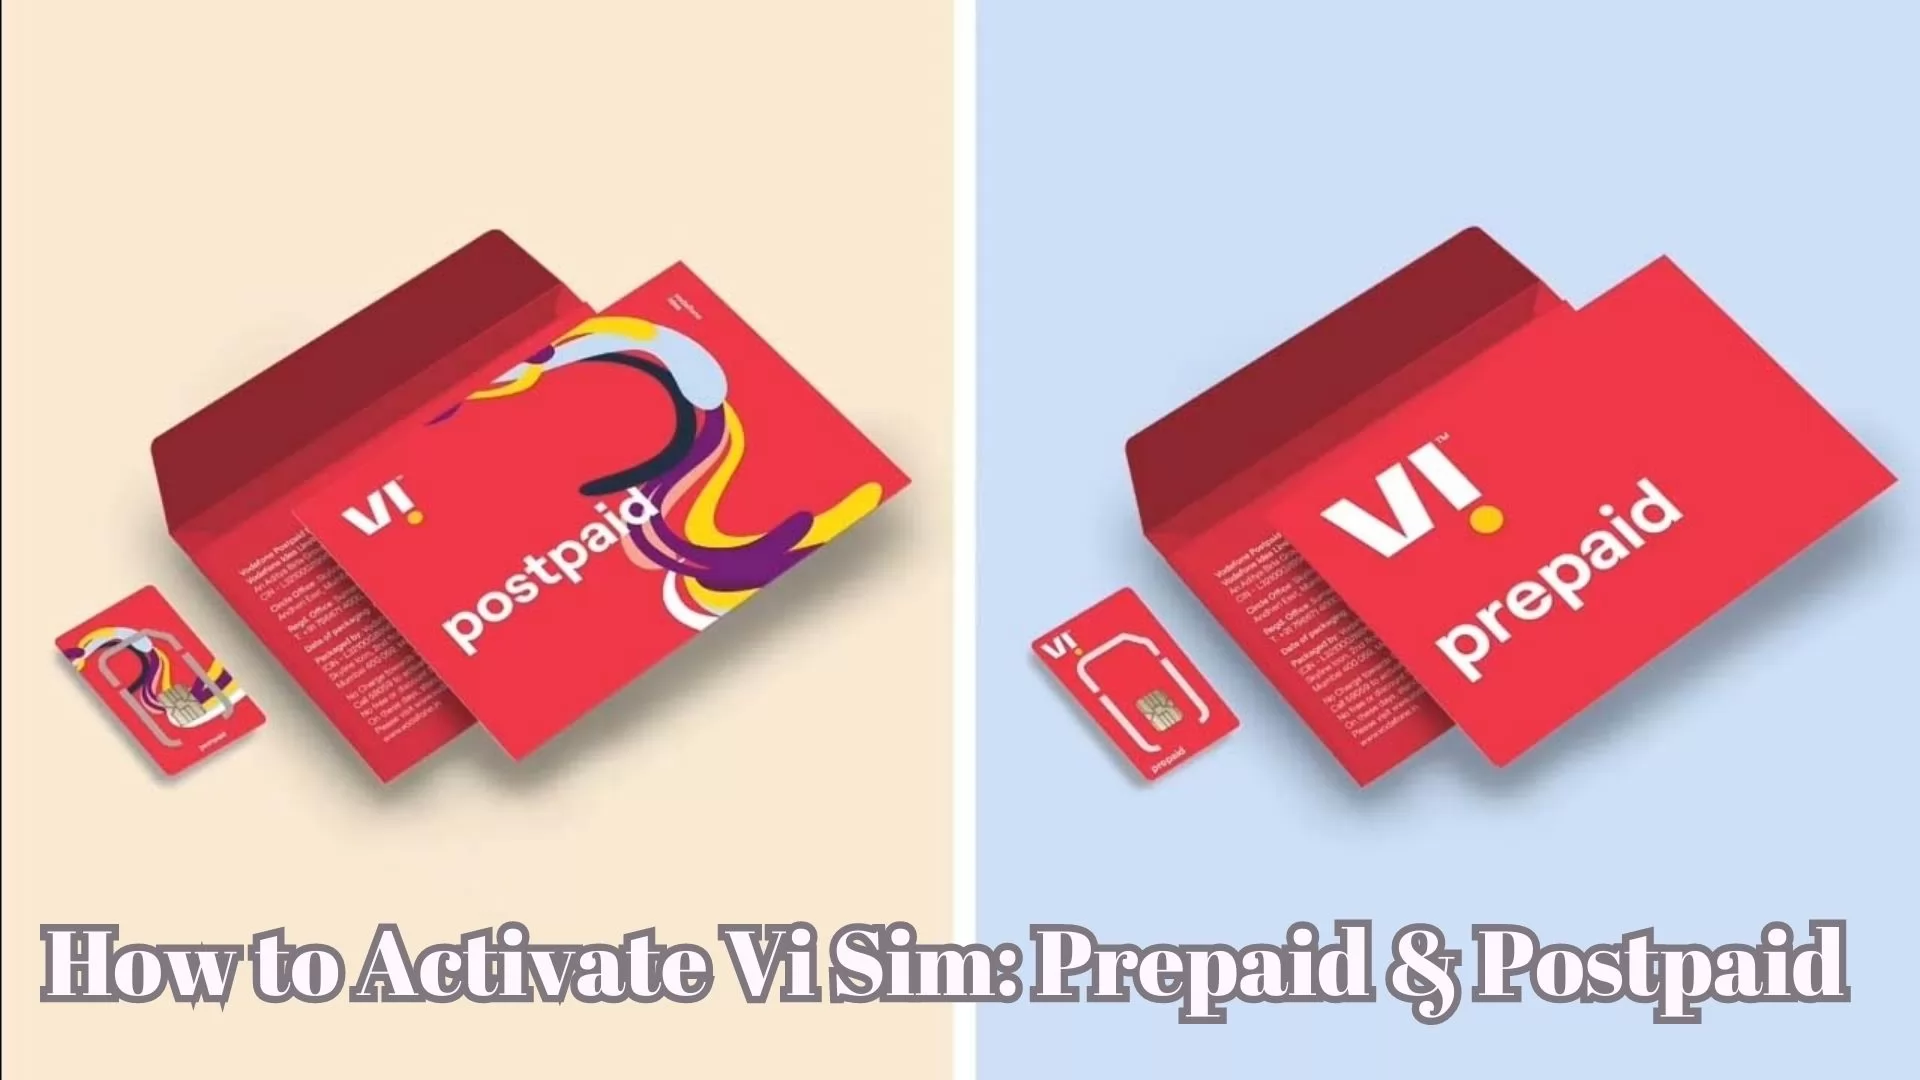 How to Activate Vi Sim: Prepaid & Postpaid